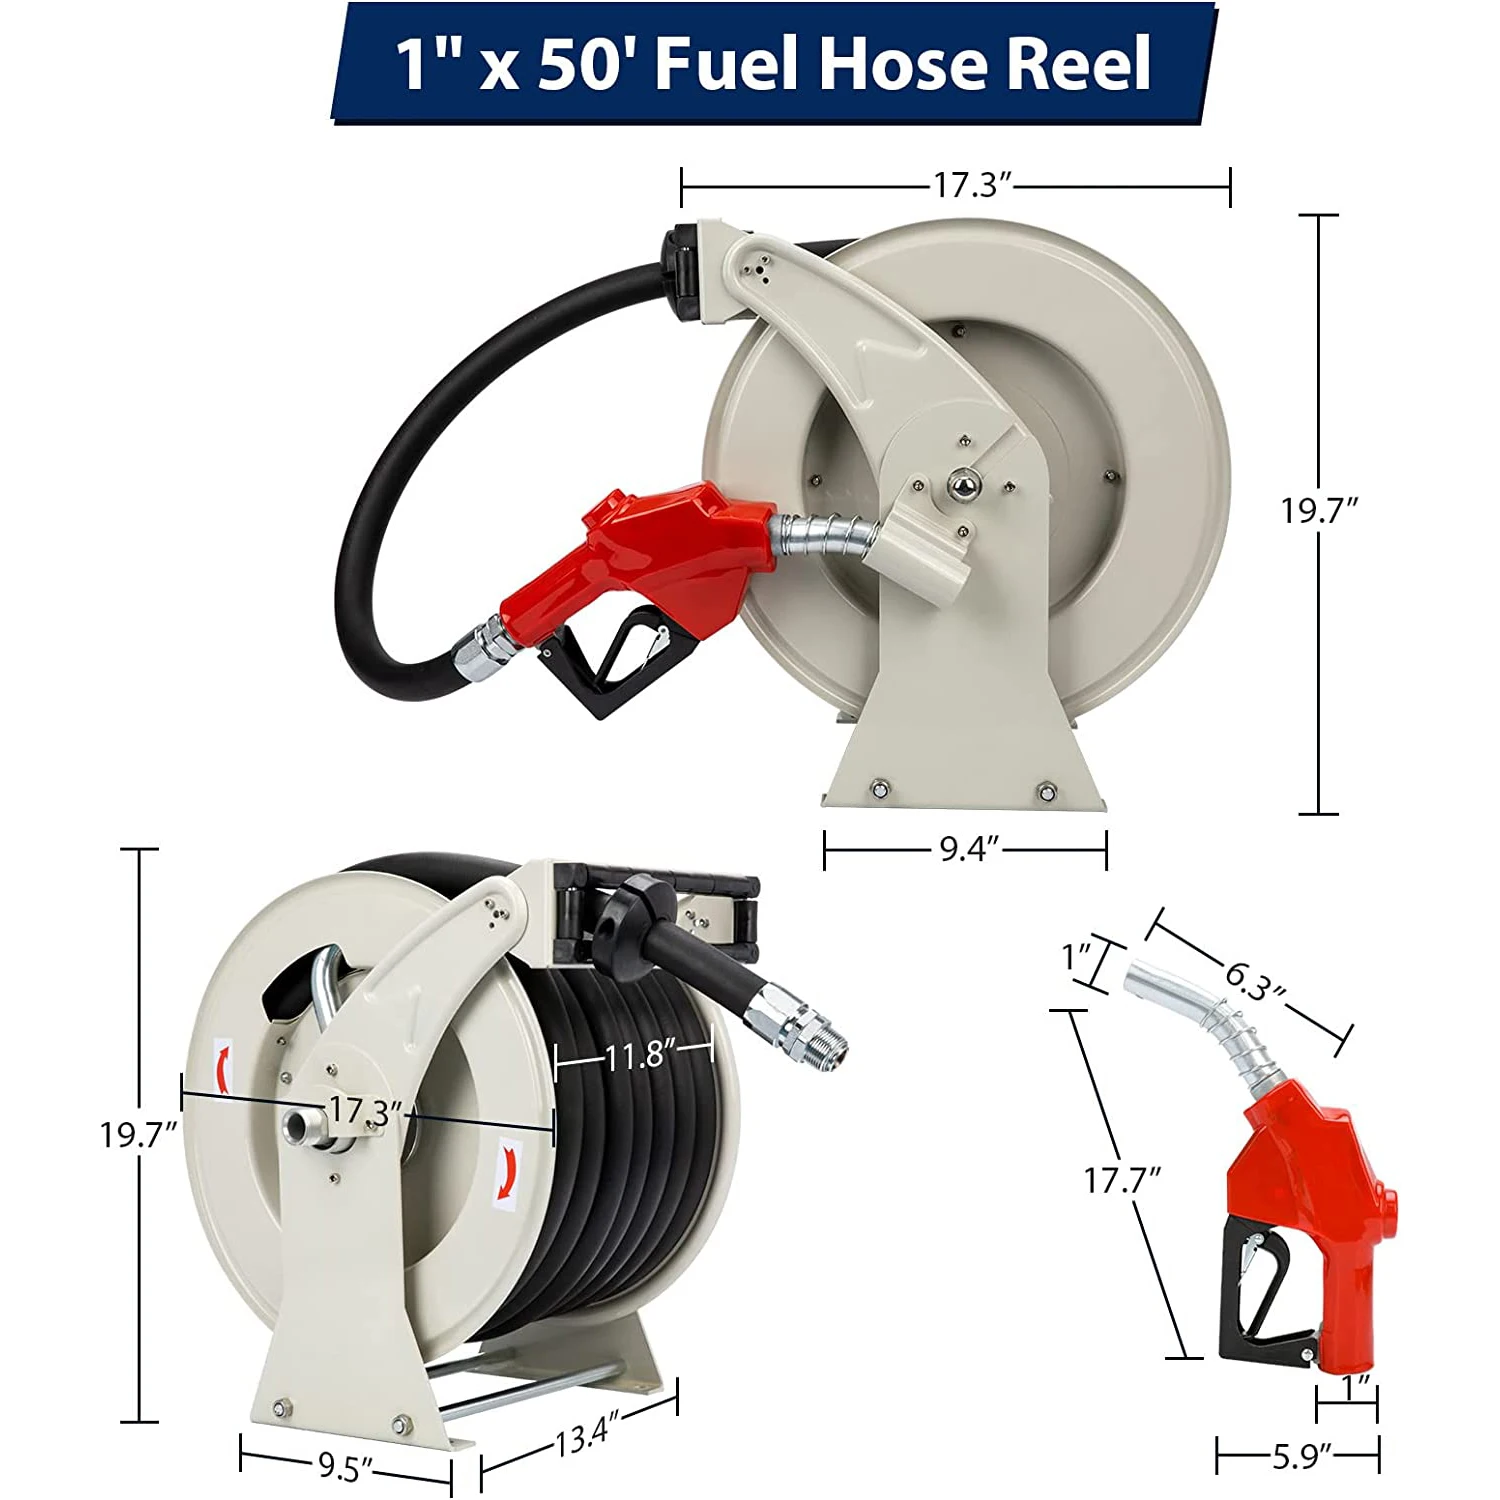 Fuel Hose Reel 1 x 50' Spring Driven Retractable Diesel Hose Reel 300 PSI  Industrial Auto Swivel Hose Reel with Fueling Nozzle